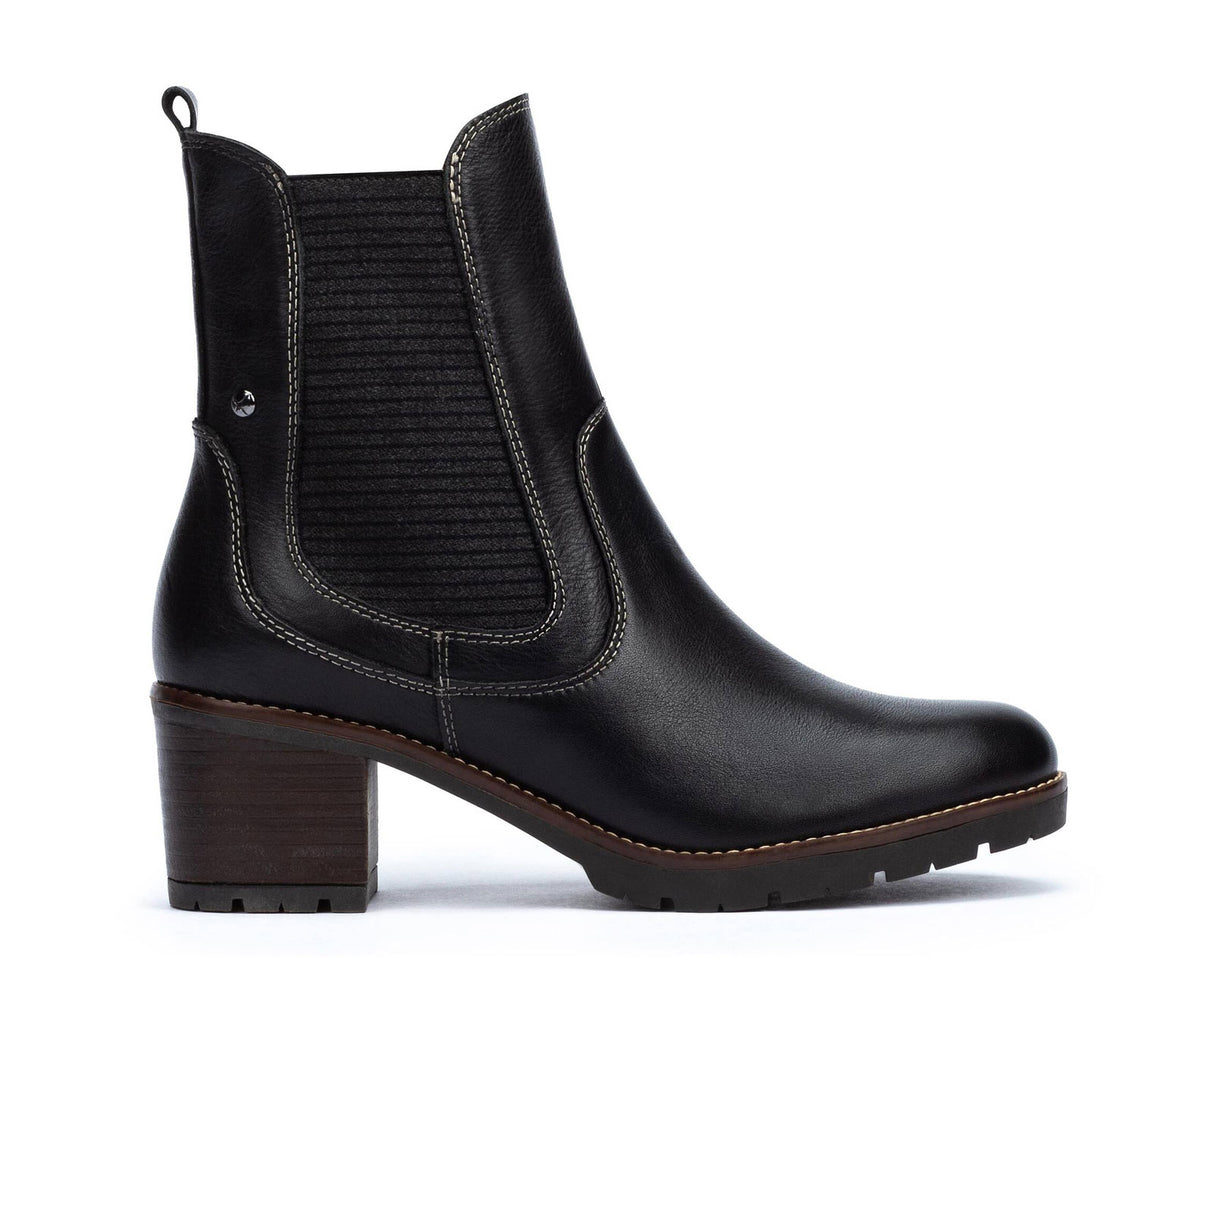 Pikolinos Llanes W7H-8948 Chelsea Boot (Women) - Black Boots - Fashion - Chelsea - The Heel Shoe Fitters